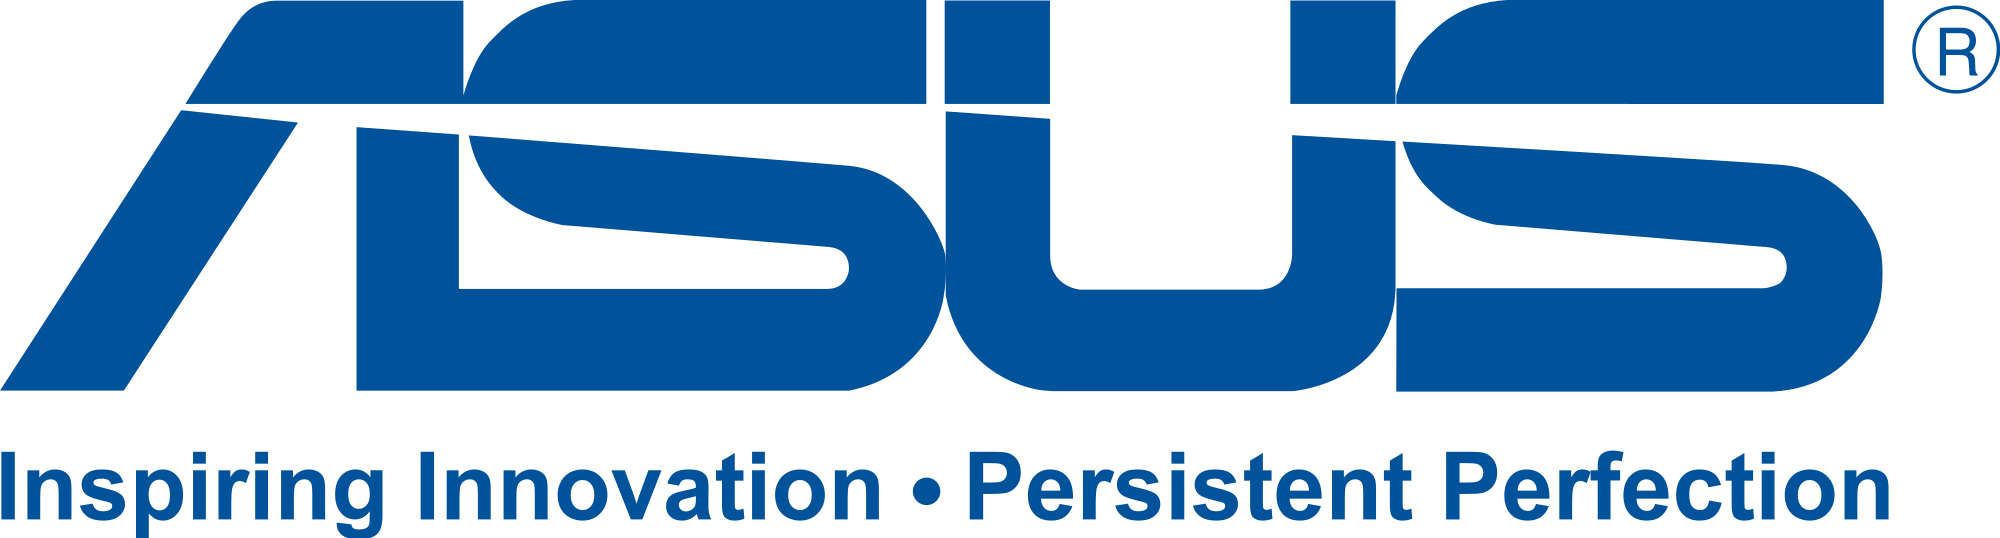 Asus Company Logo - ASUS Corporate Logo.svg